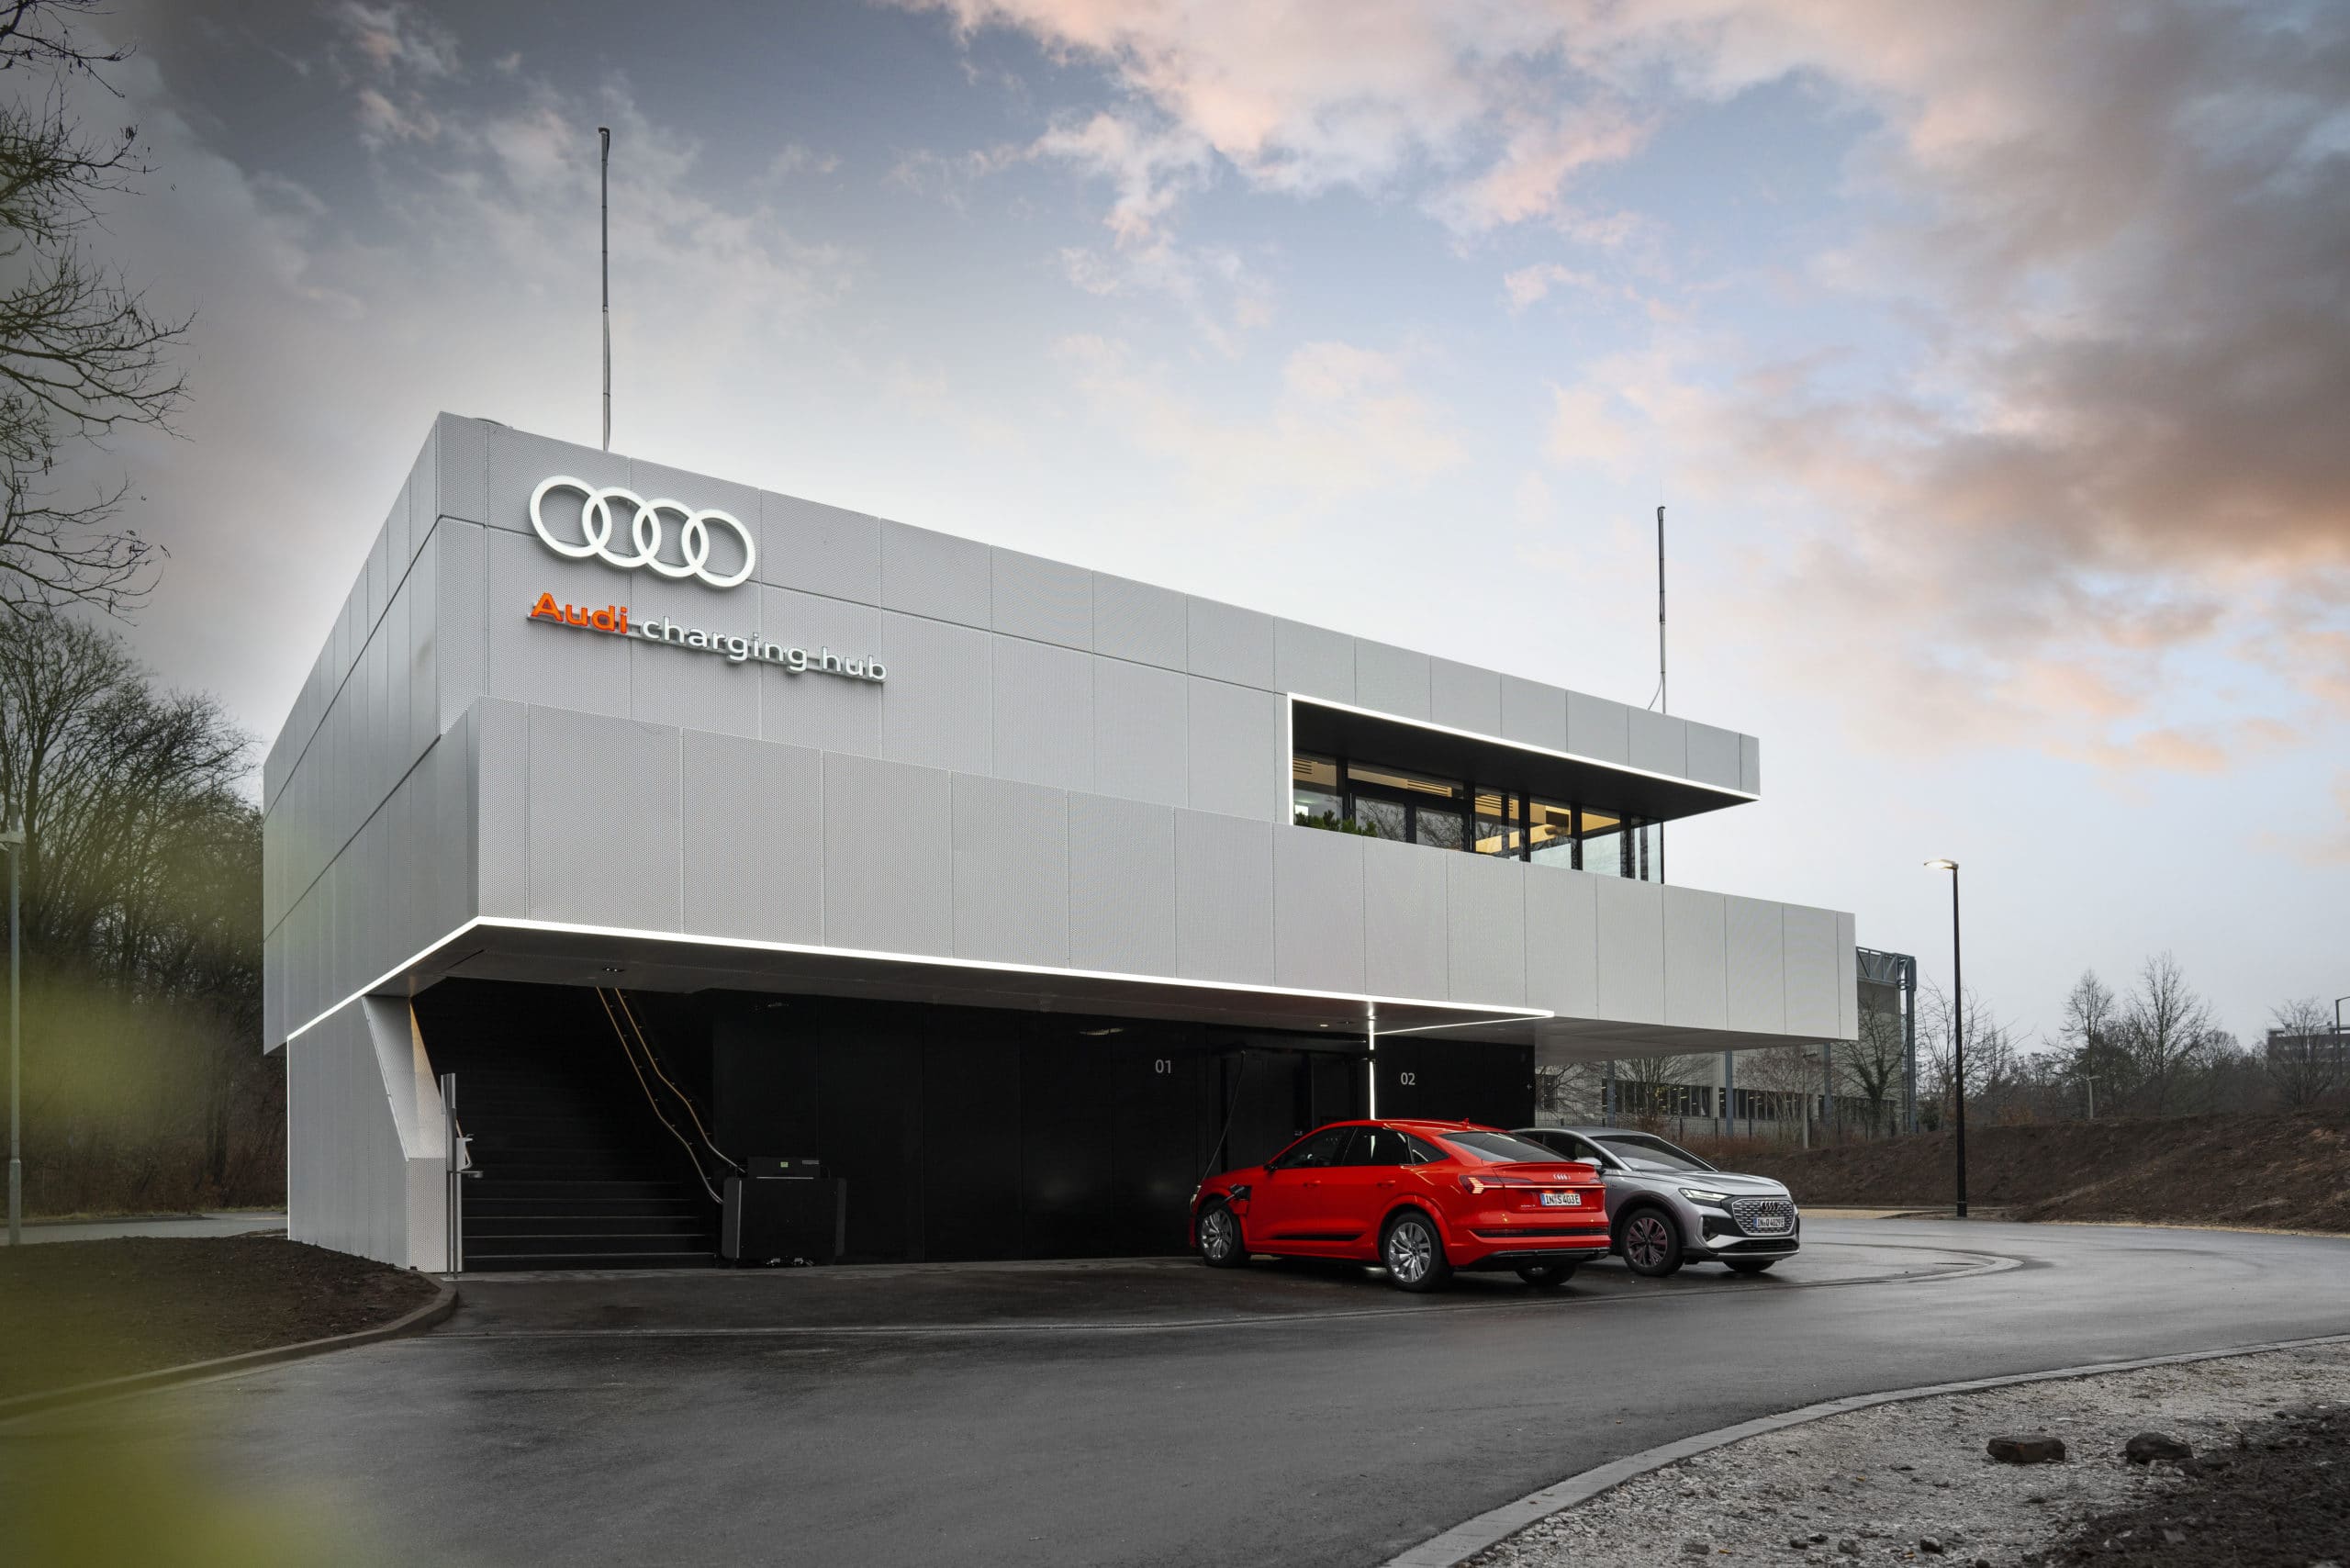 World first: start of the Audi charging hub